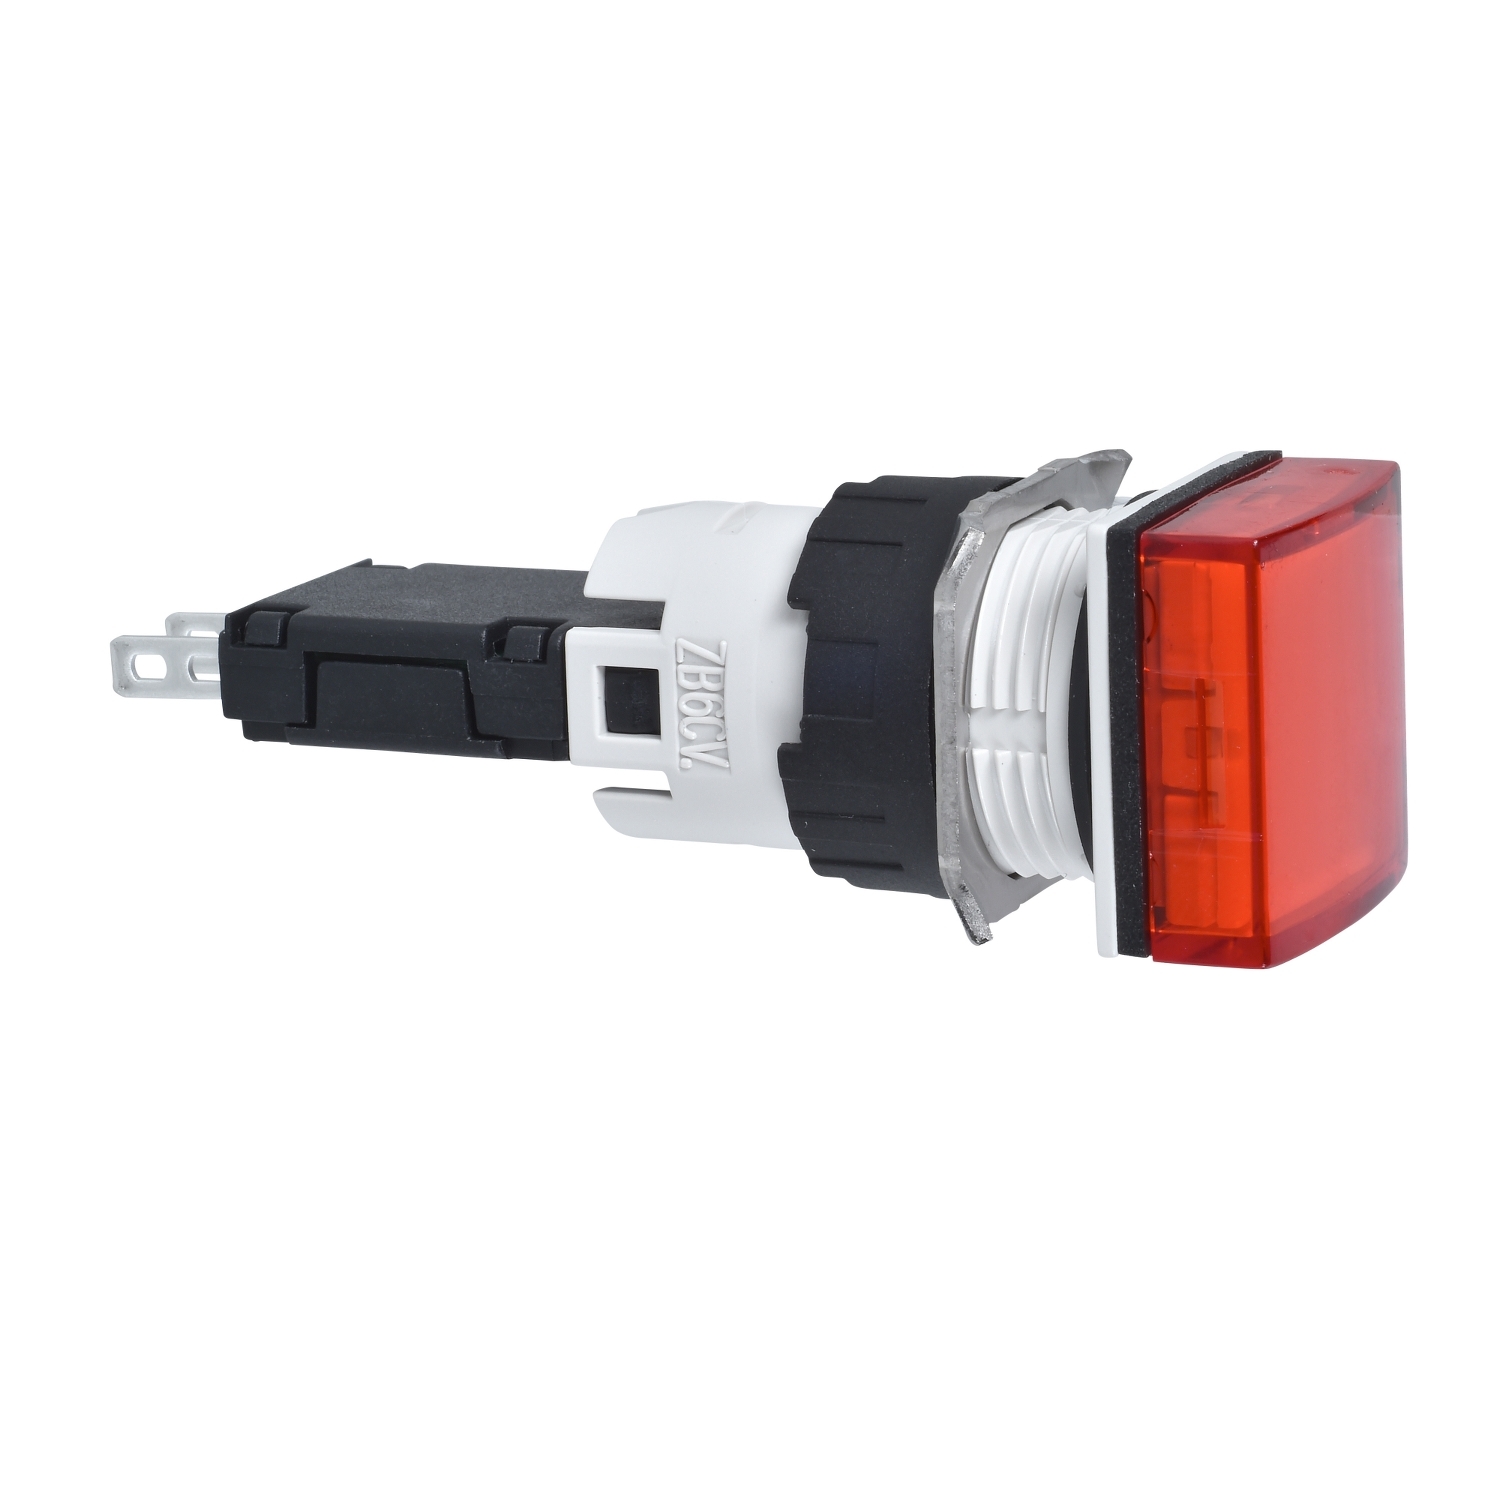 Complete pilot light, Harmony XB6, square red, plastic, 16mm, integral LED, 12...24V